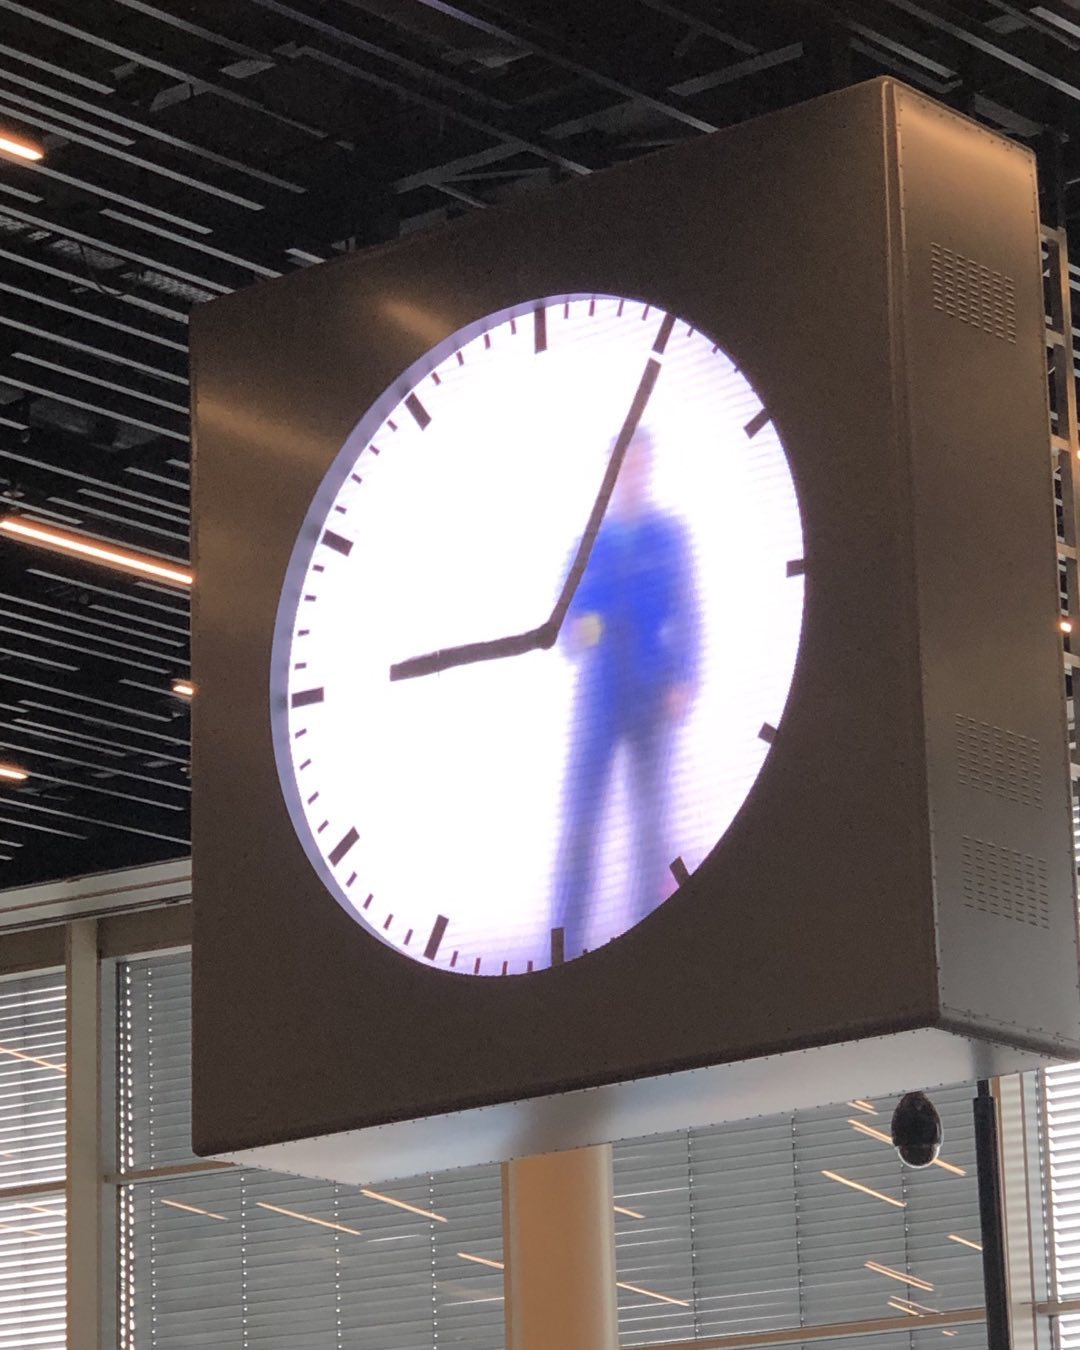 Cool clock
-
-
#flying #airport #airportclock #visitamsterdam #summerbreak #visiteurope #justgo #repülőtér #amsterdam #amszterdam